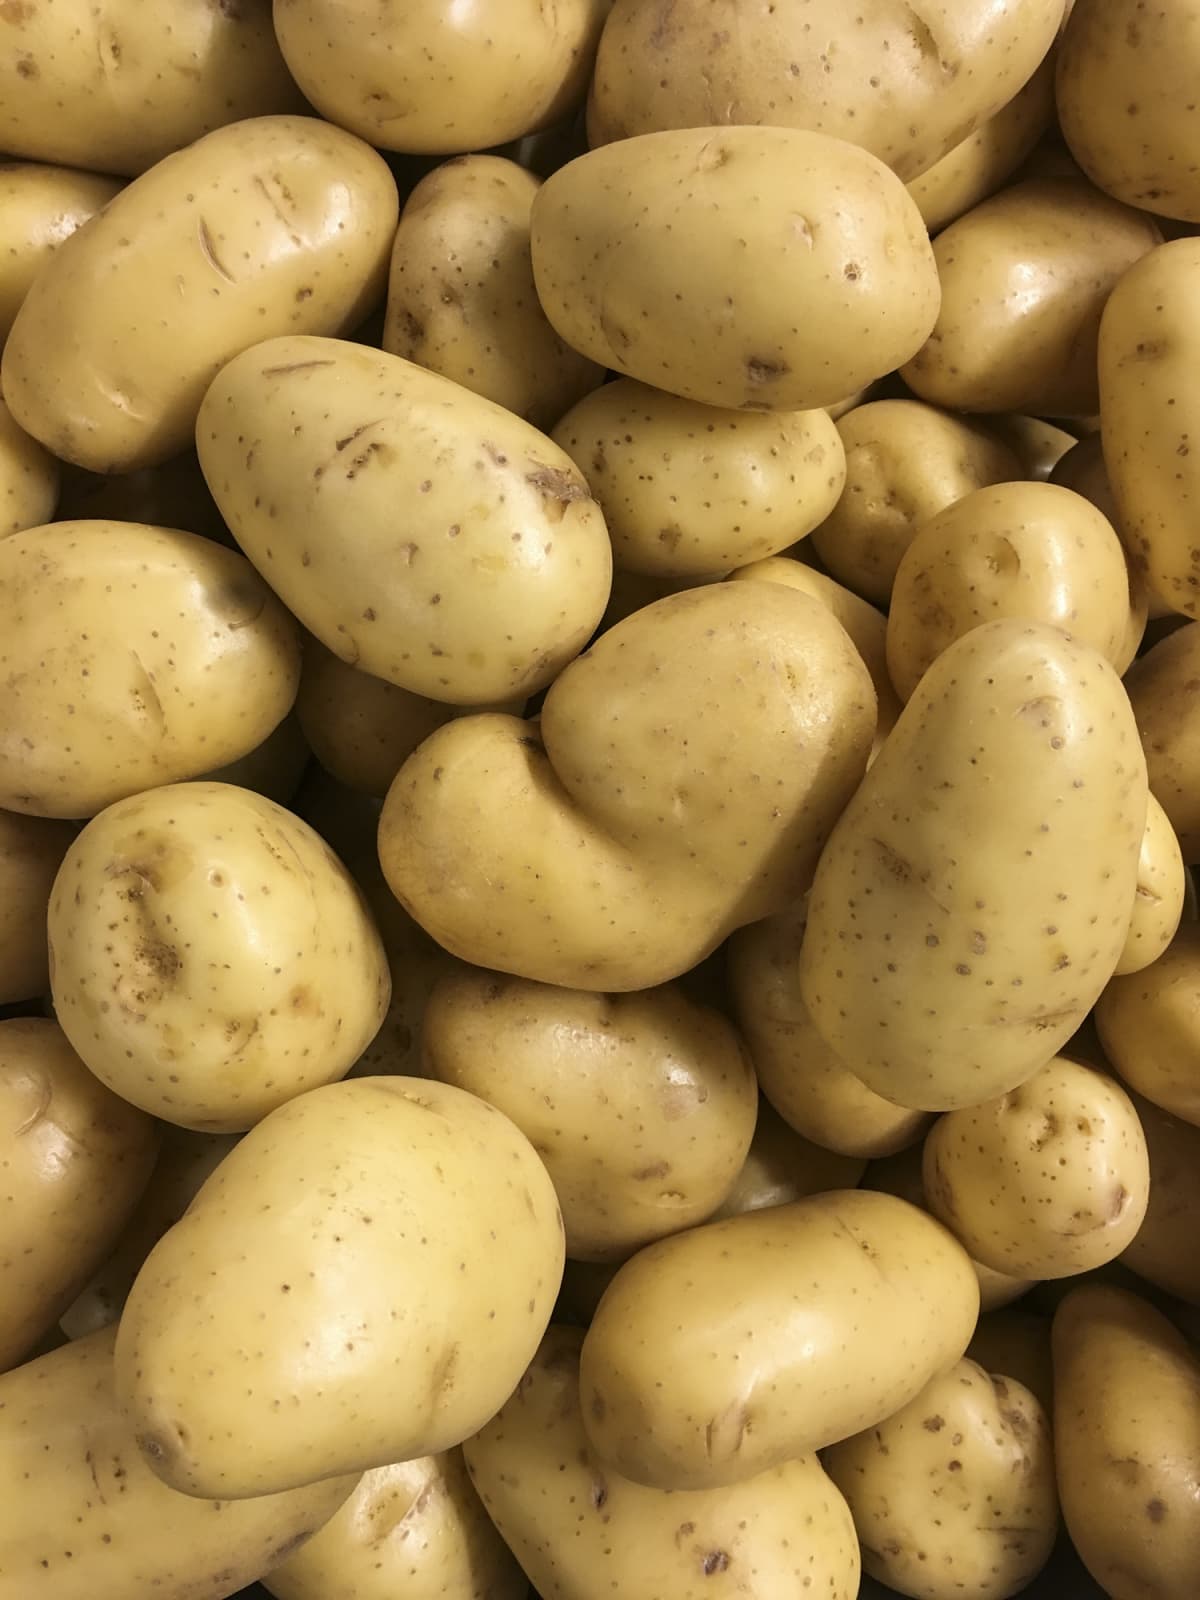 Organic raw potatoes in market